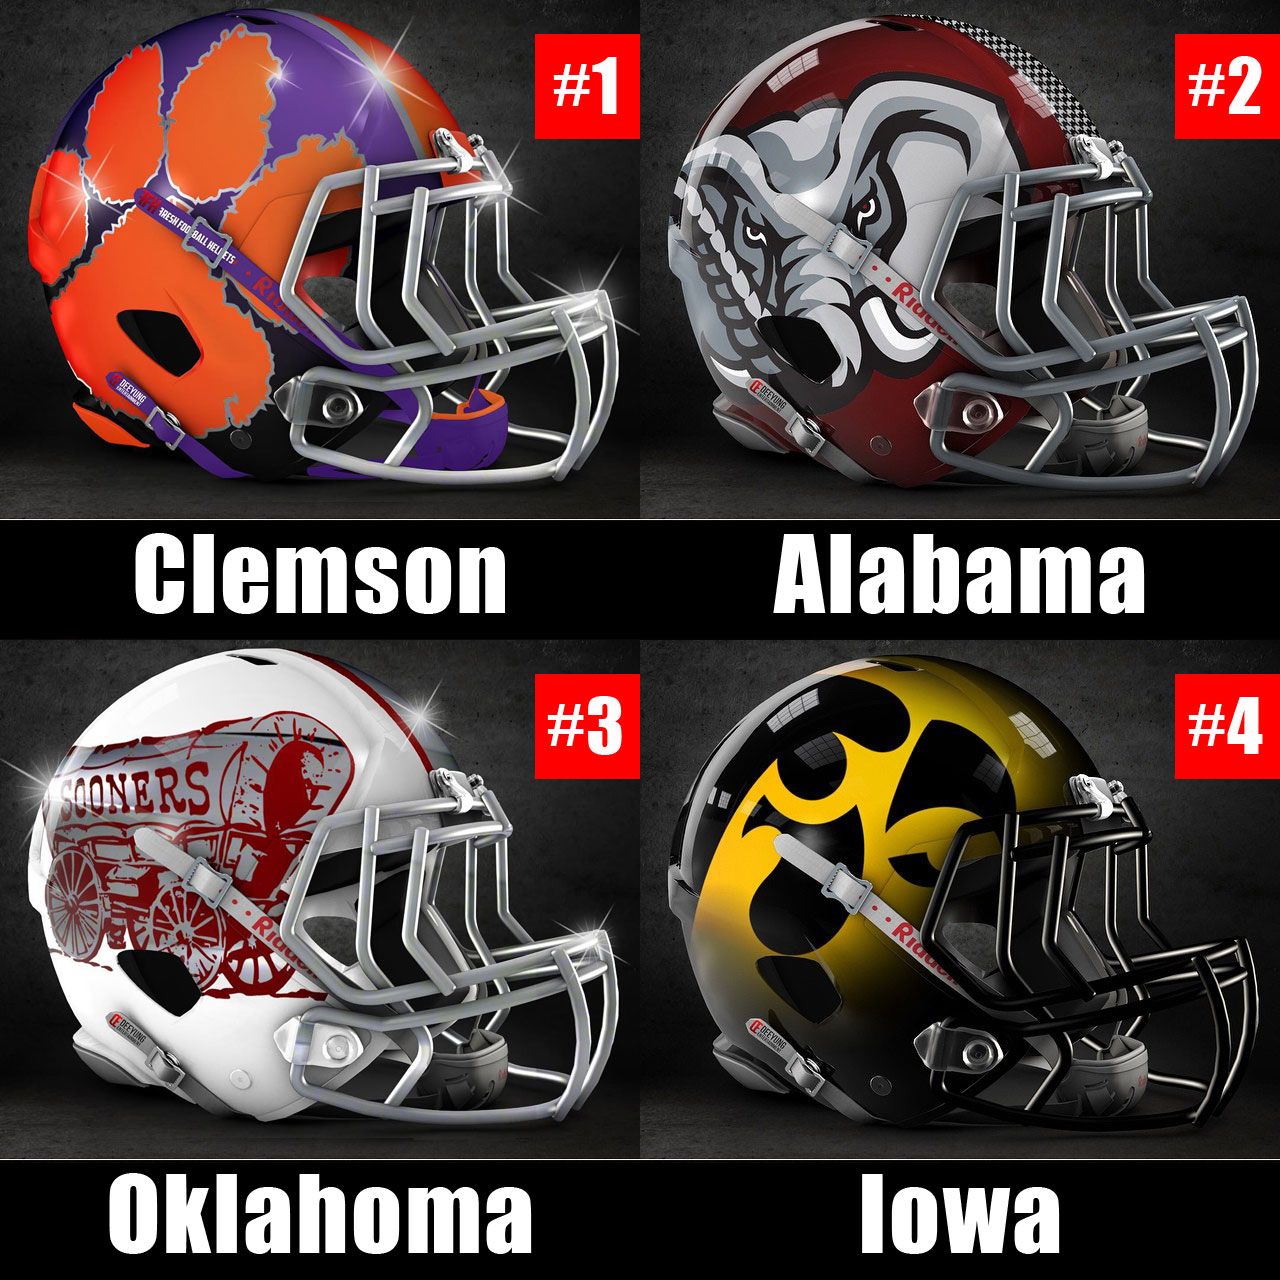 College Football Playoff Top Four with Clemson, Alabama, Oklahoma, Iowa